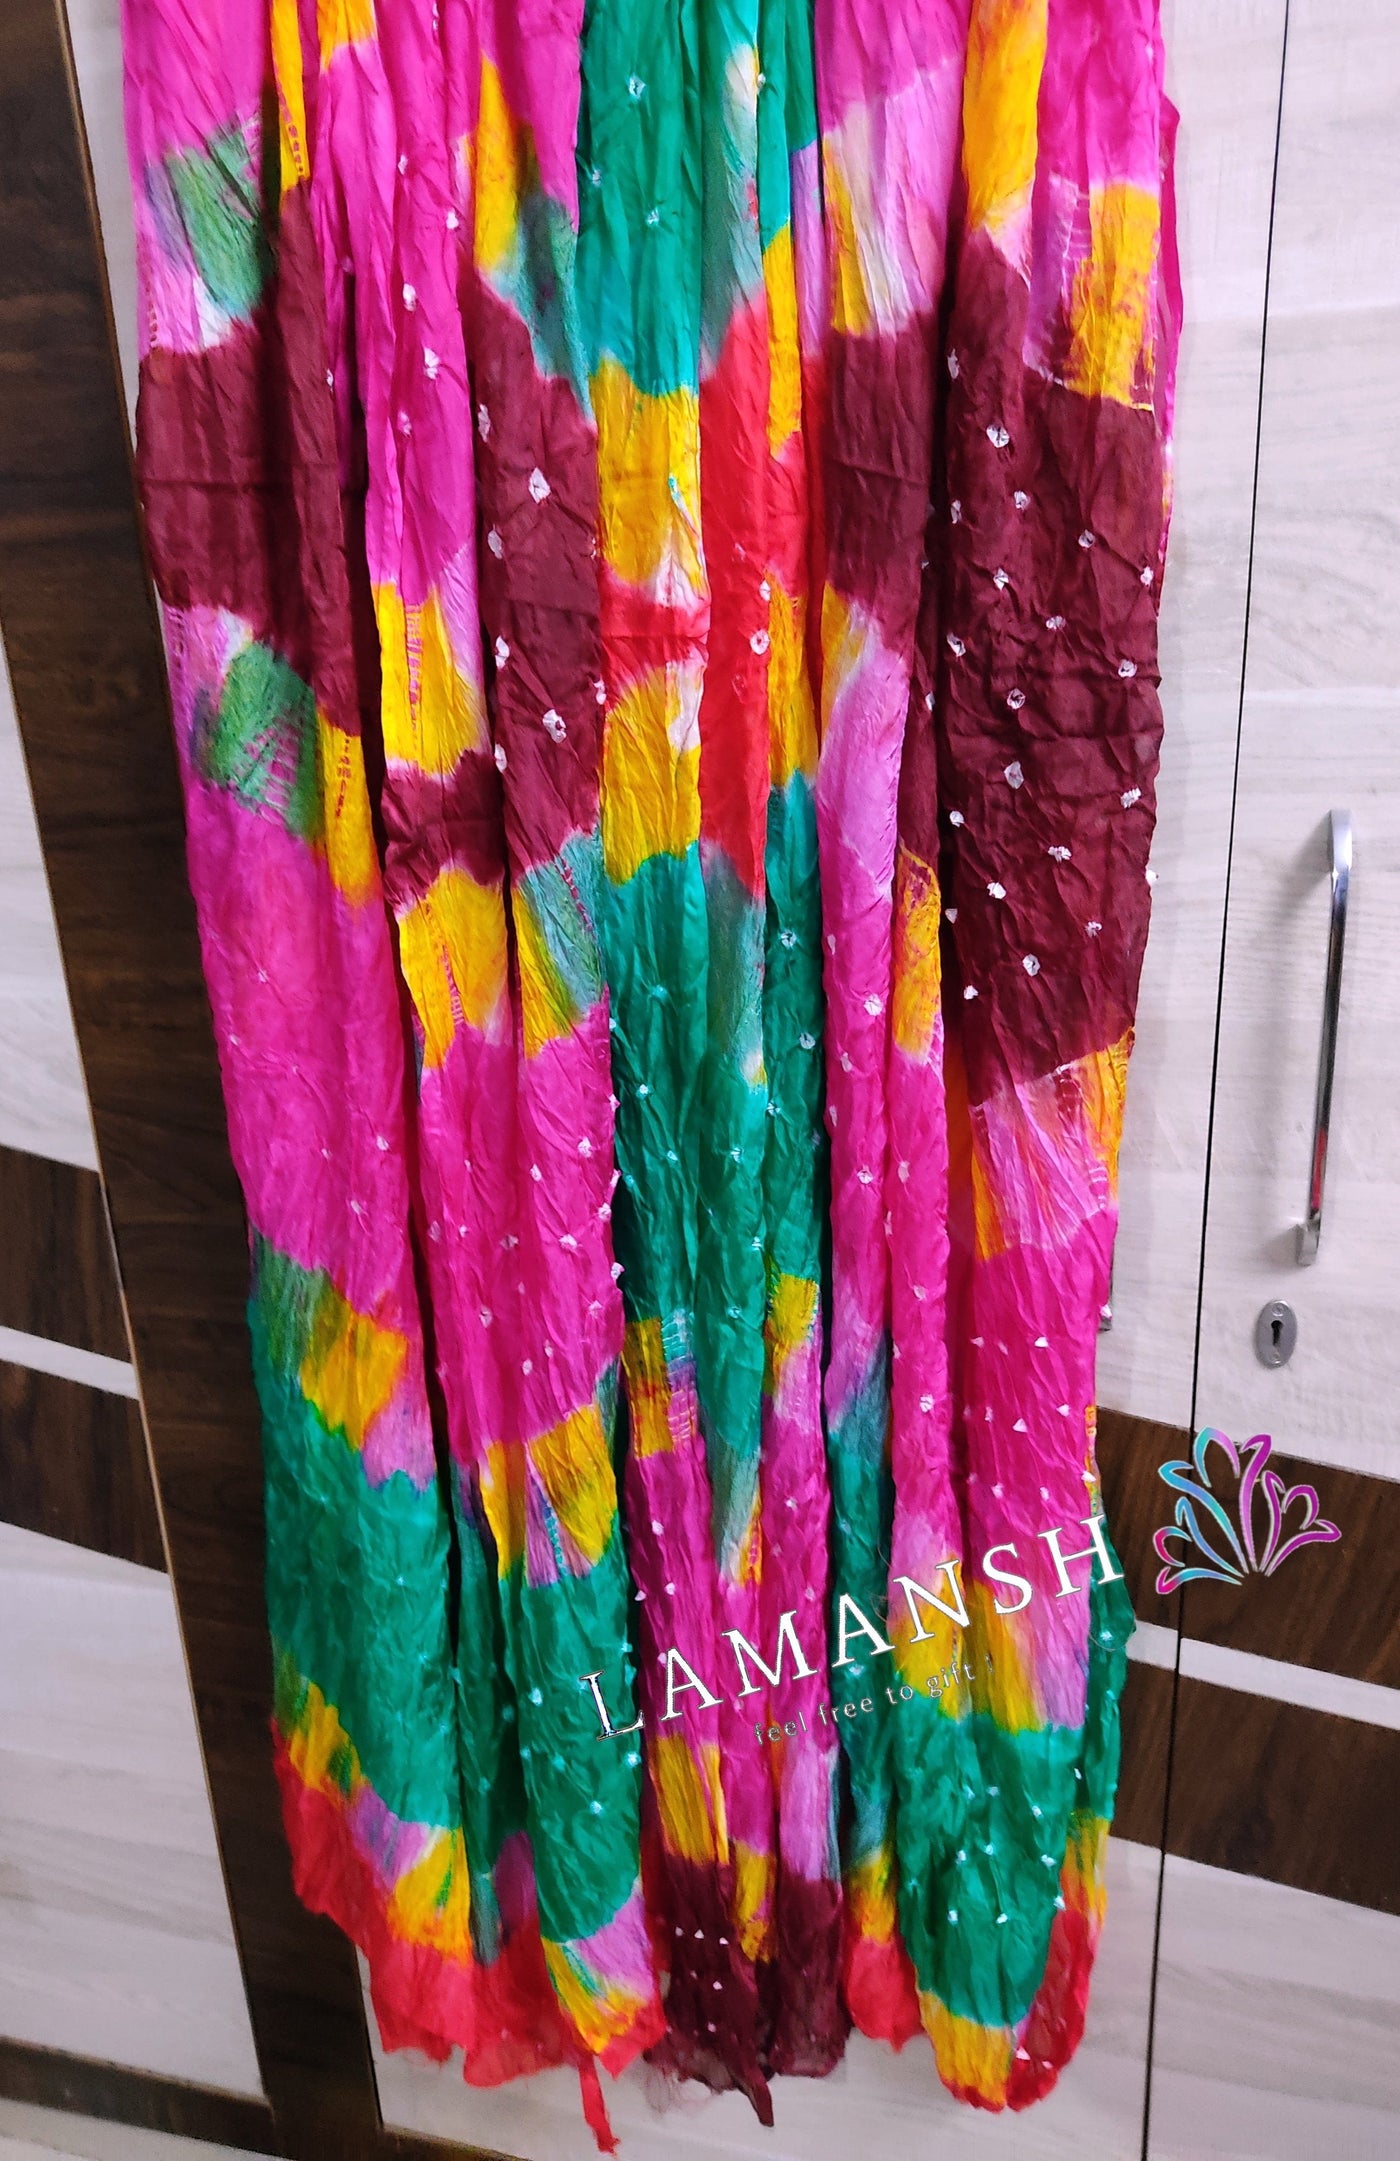 Lamansh dupatta LAMANSH® Silk Nazneen Pachrangi Printed Dupatta's (2 metre) in Assorted colors / Return Gifts 🎁 & Favors for bridesmaids or ladies guests in Wedding , or Pooja ceremony